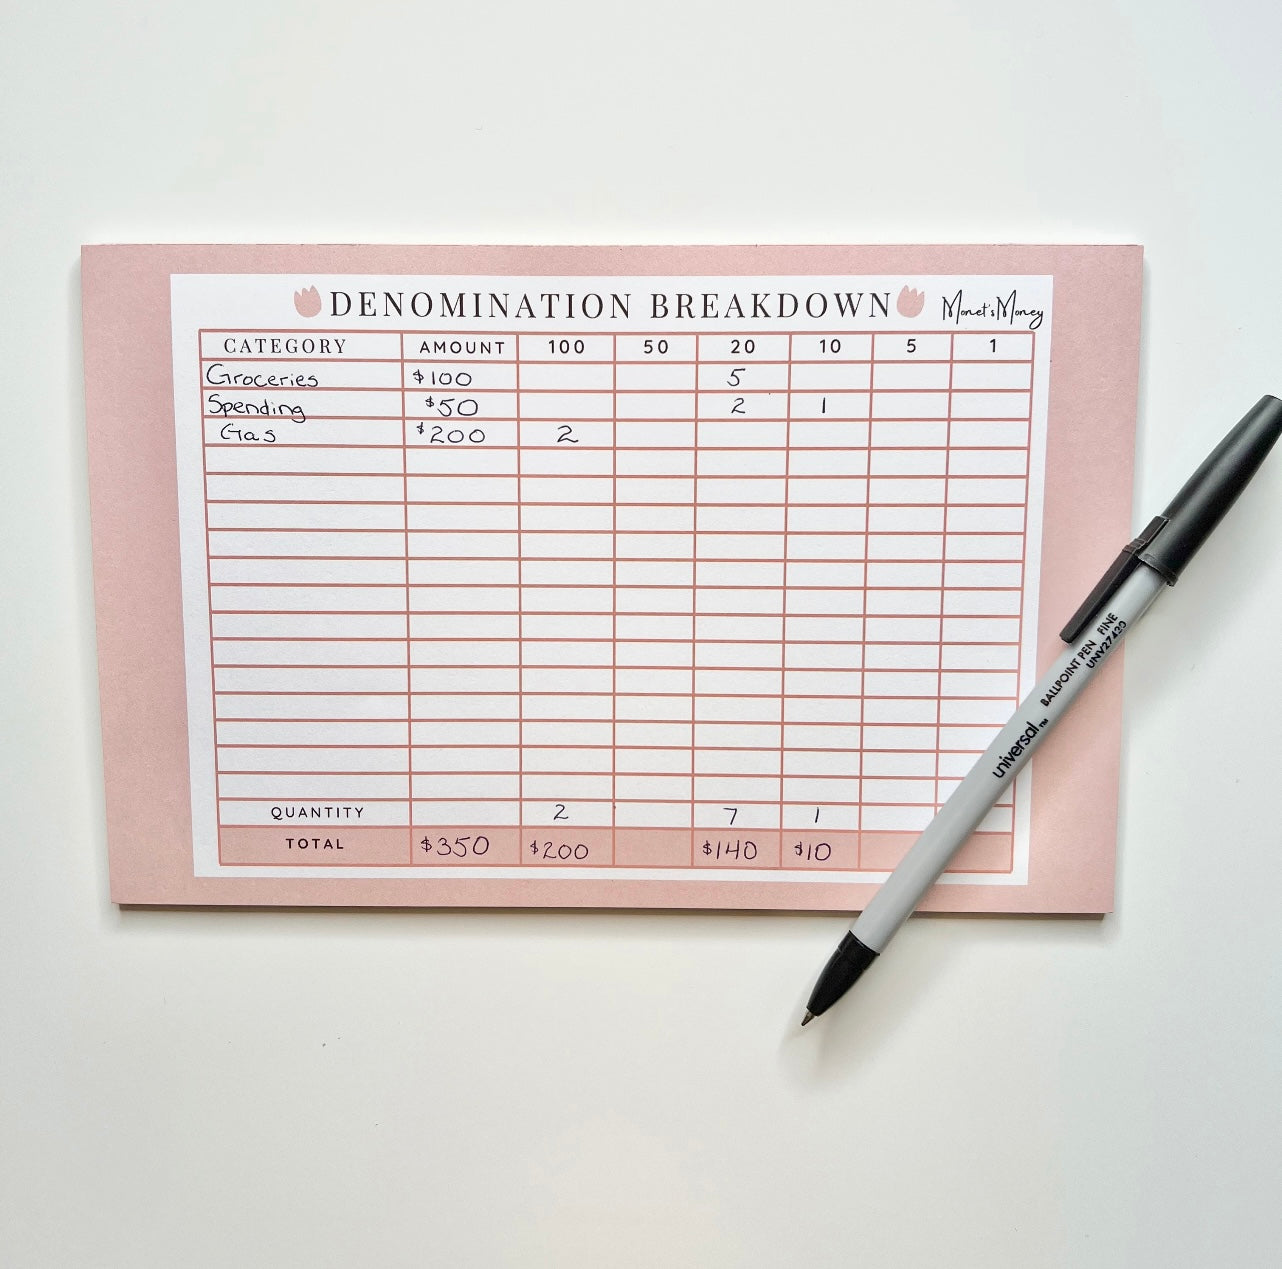 Denomination Breakdown Notepad | Cash Breakdown | Cash Withdraw